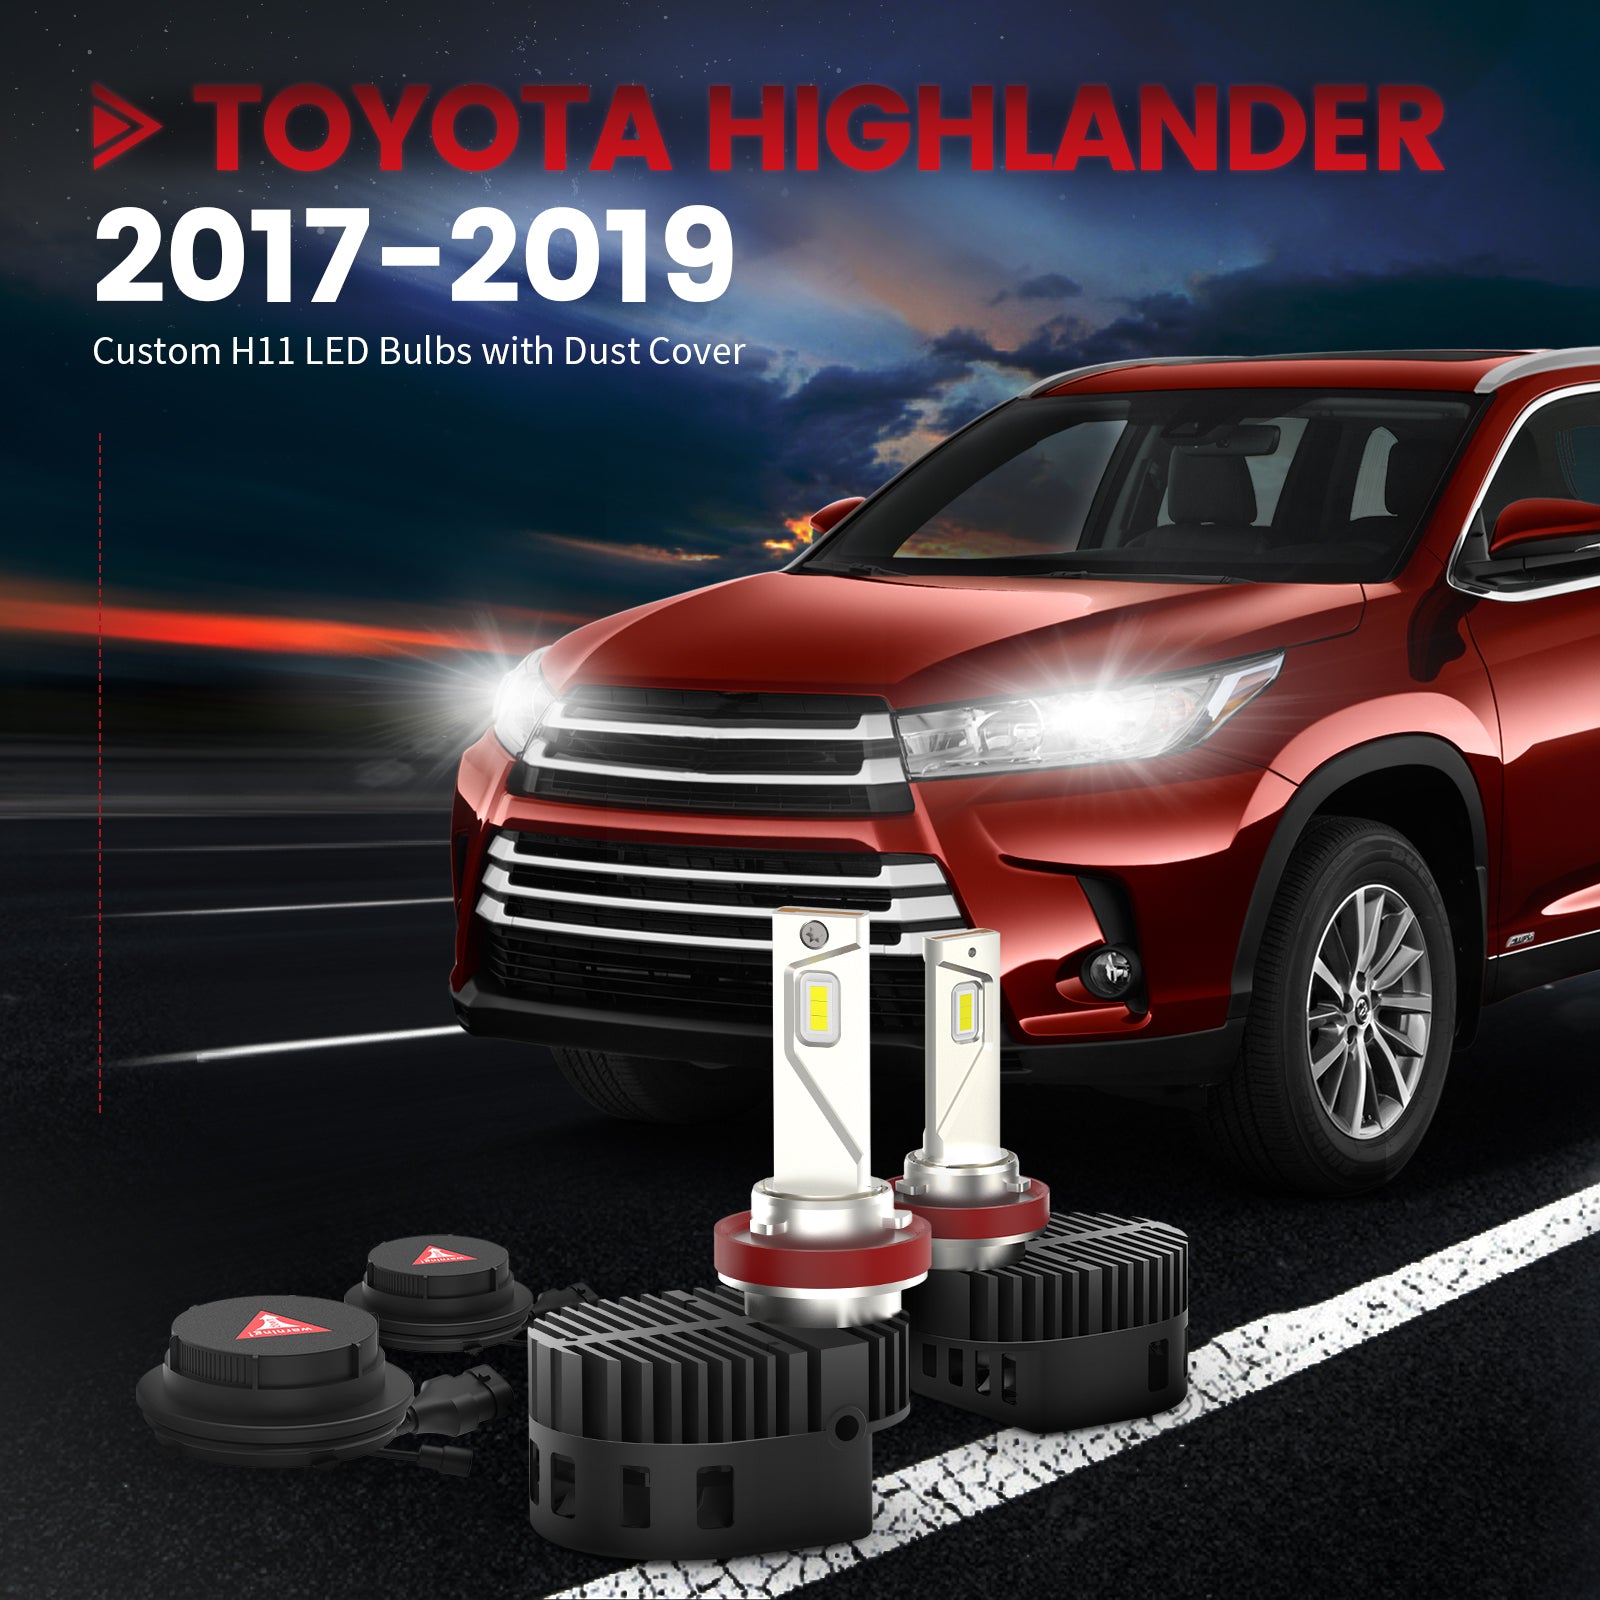 Toyota Highlander 2017-2019 Custom H11 LED Bulbs with Dust Cover | Pro